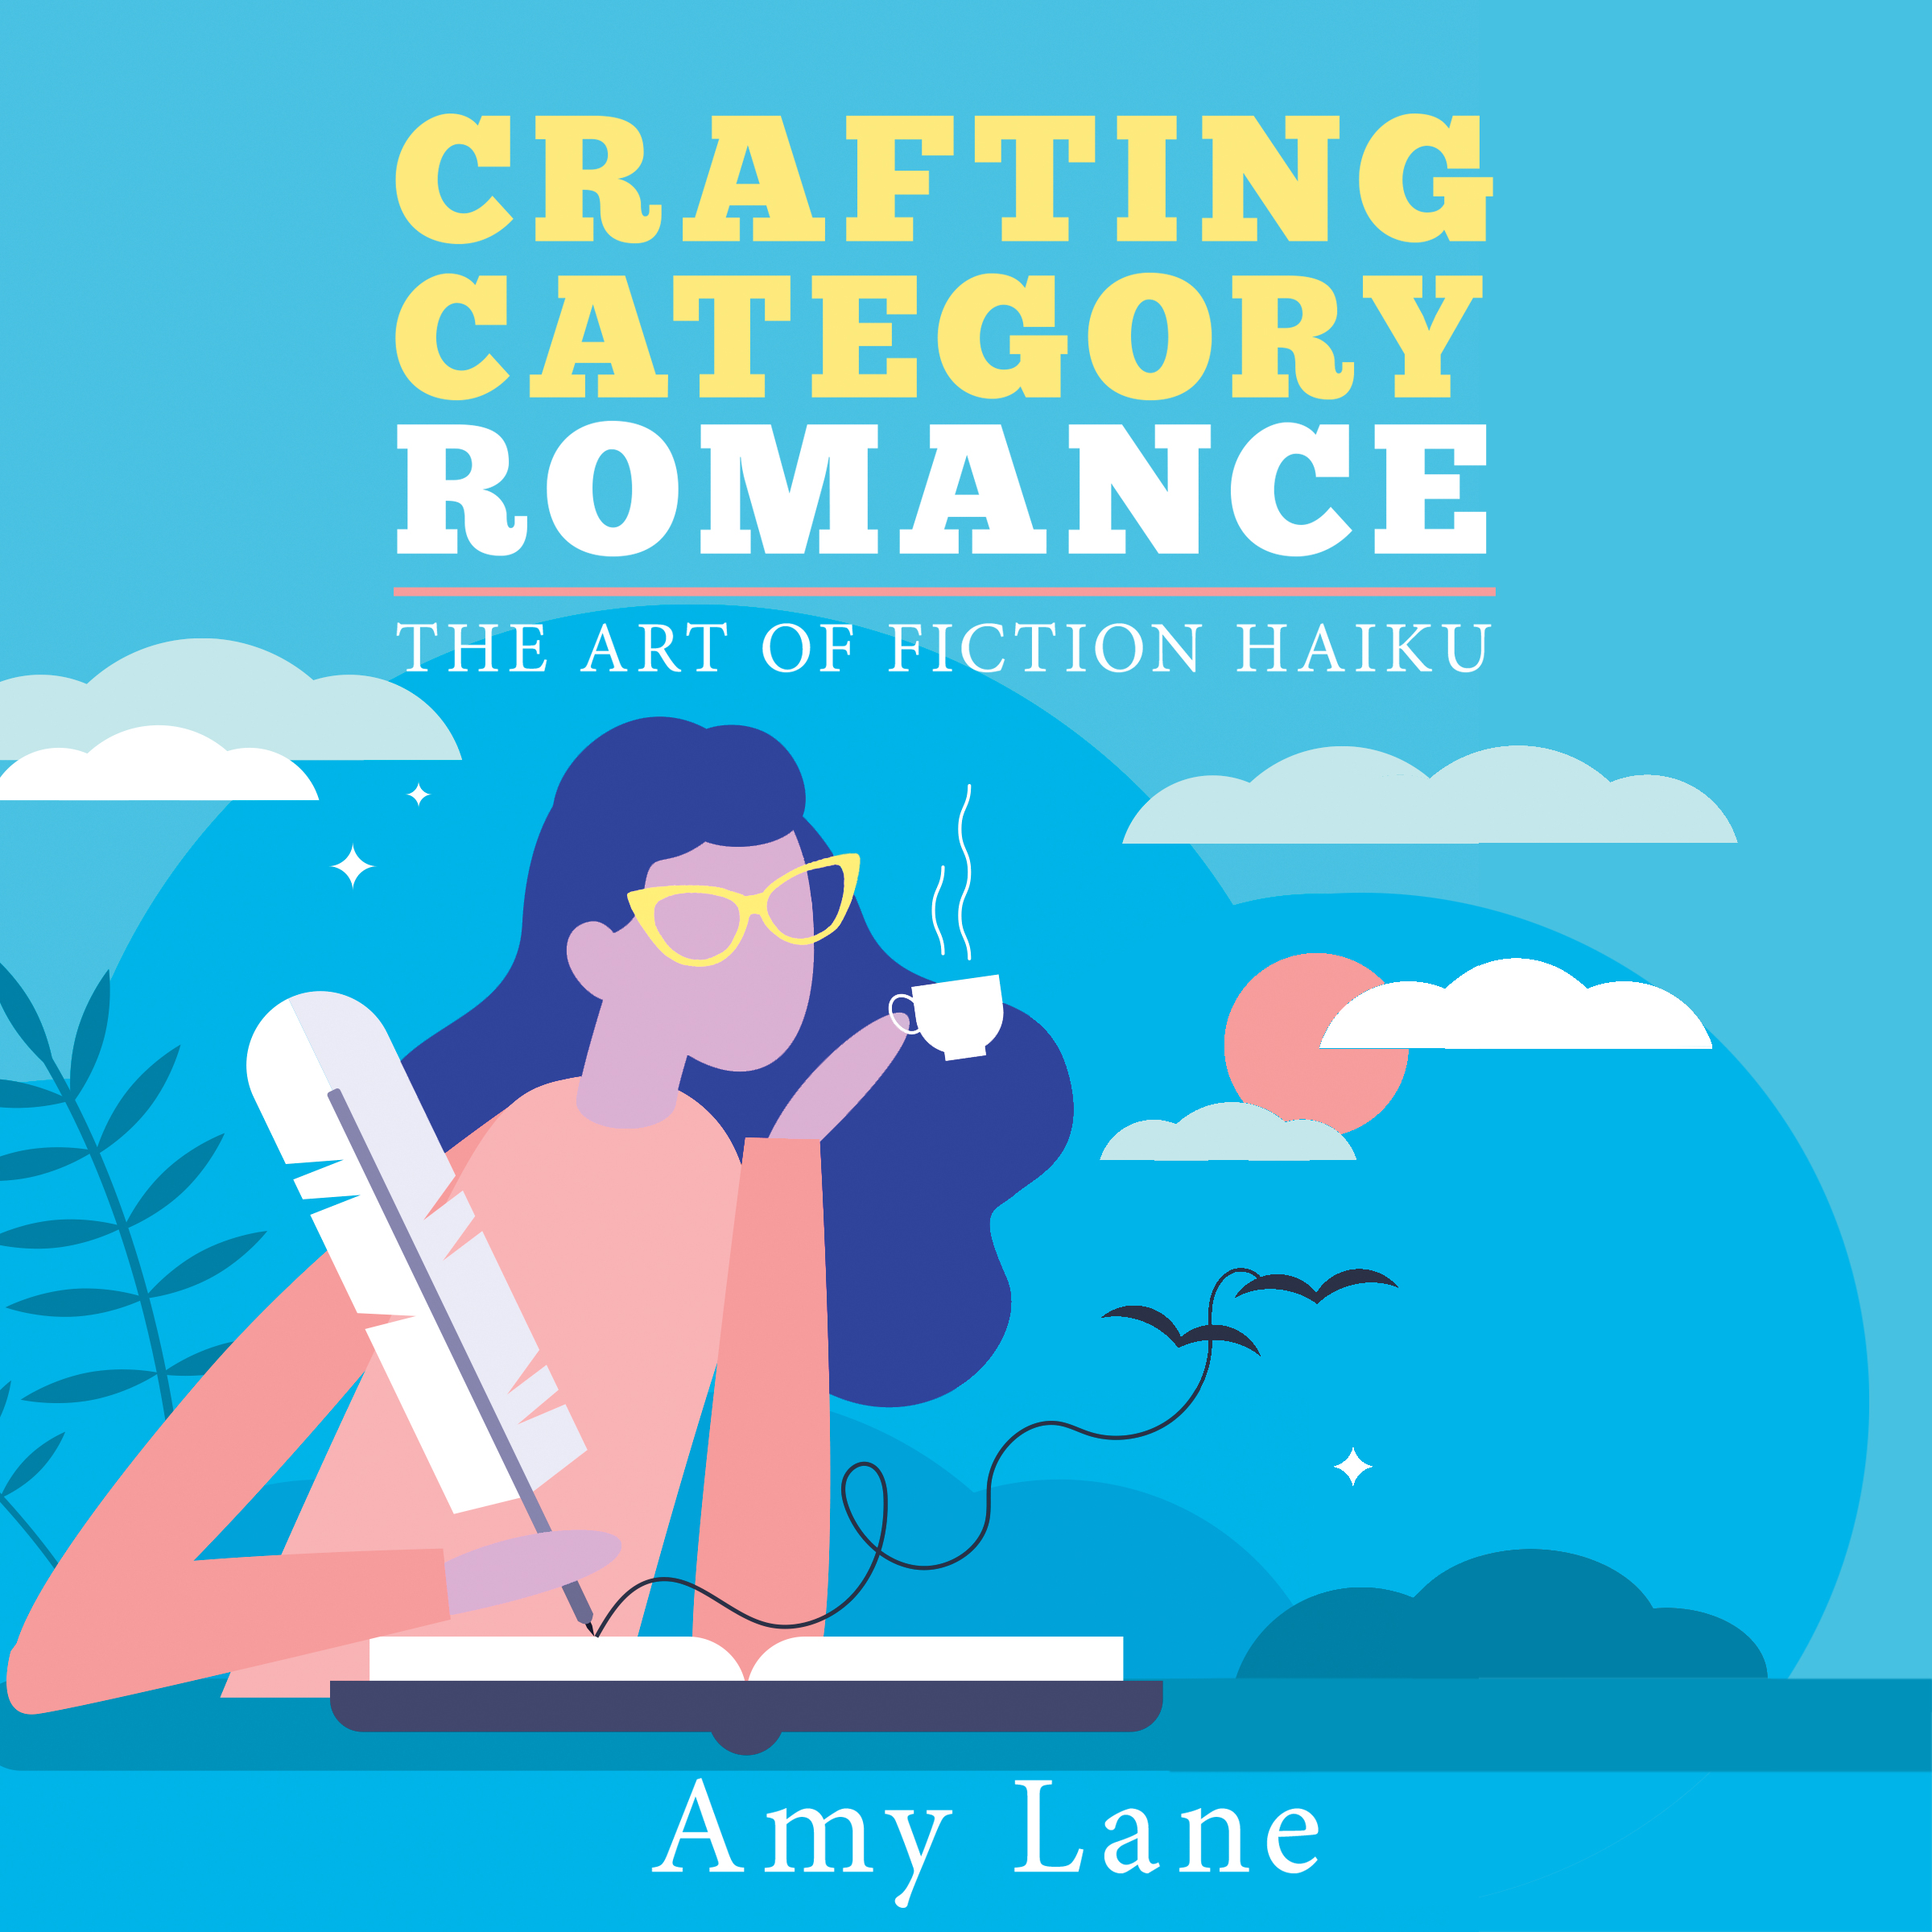 Crafting Category Romance - The Art of Fiction Haiku